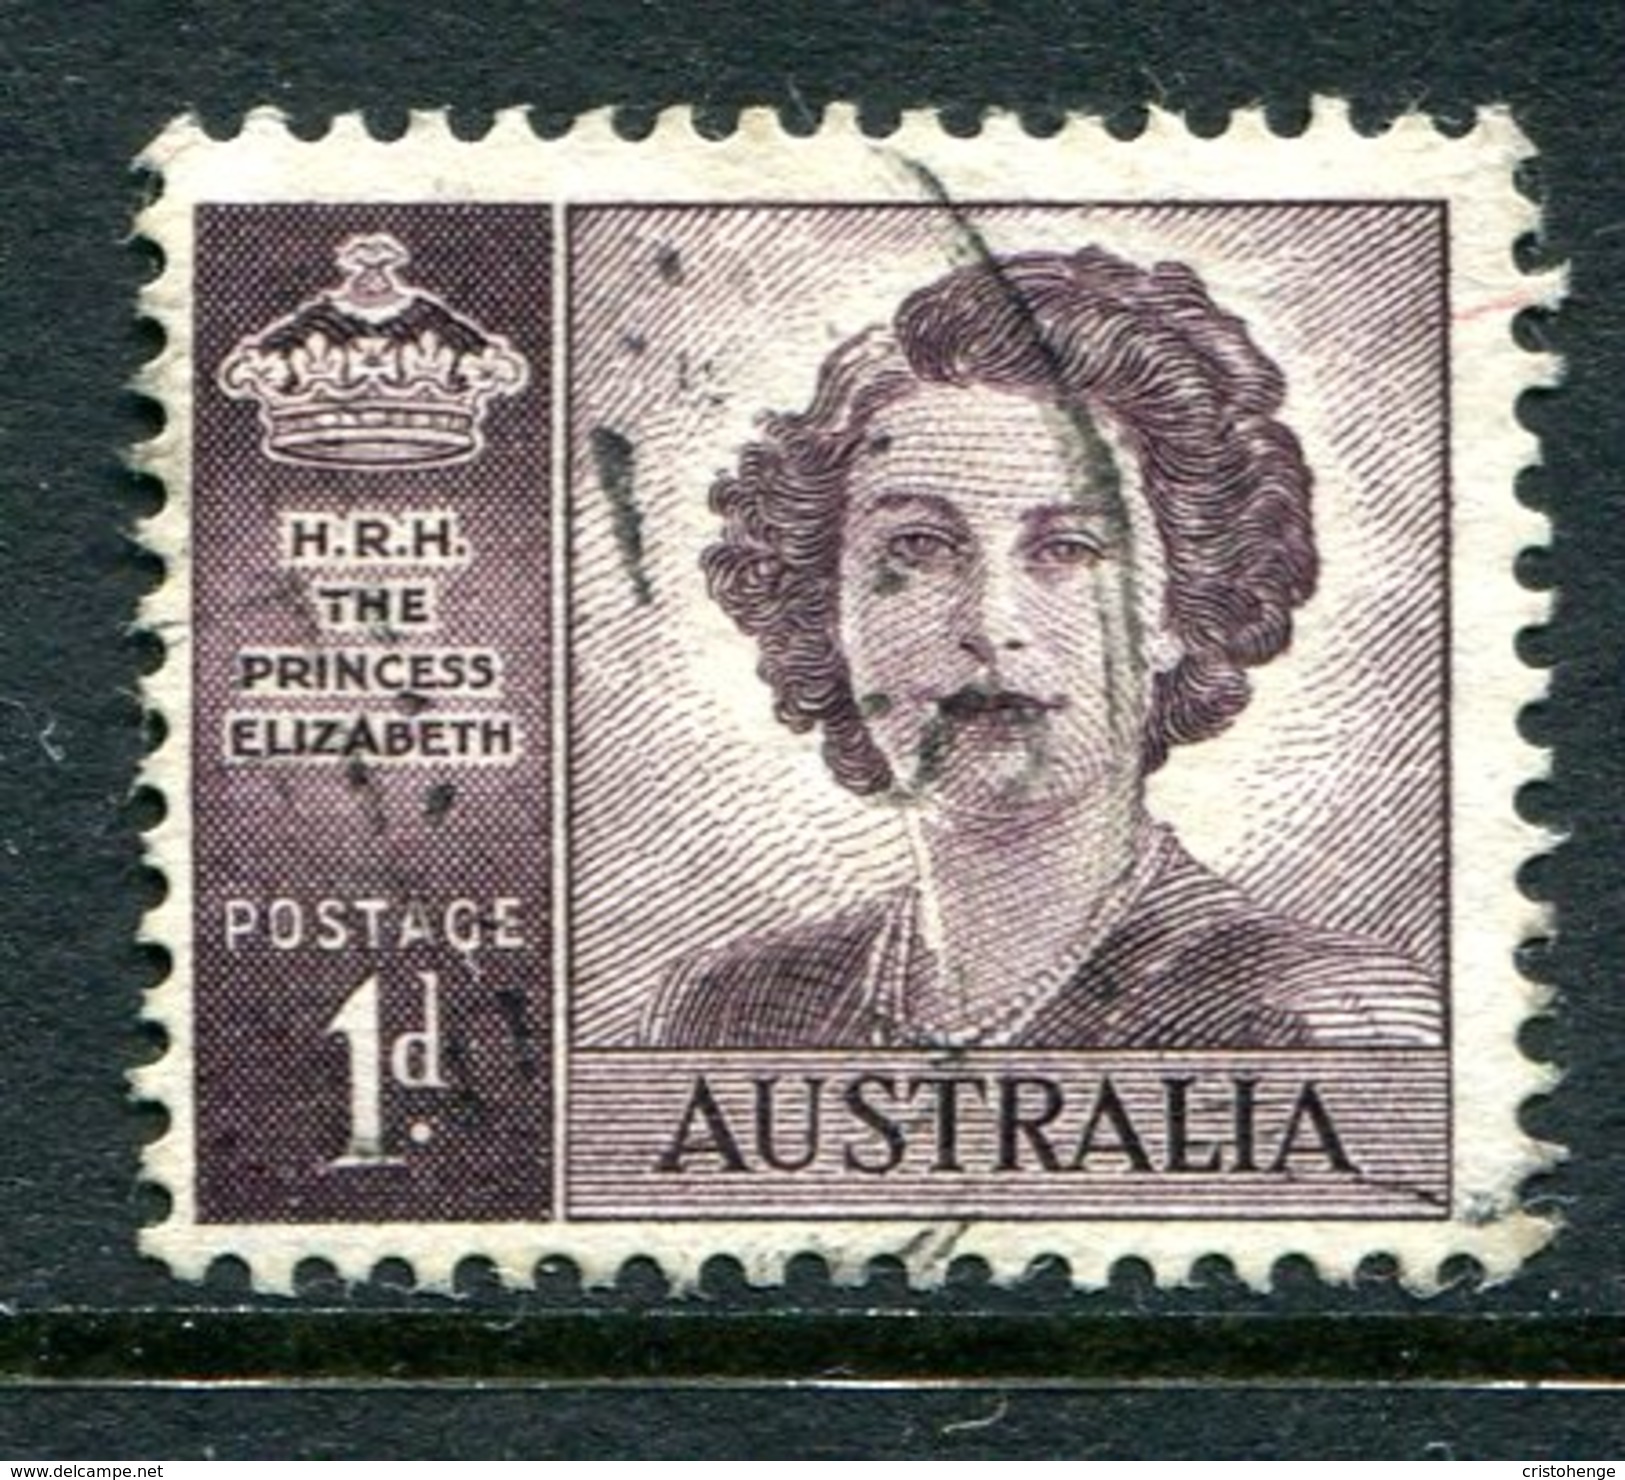 Australia 1947-52 Marriage Of Princess Elizabeth - No Wmk. Used (SG 222a) - Mint Stamps